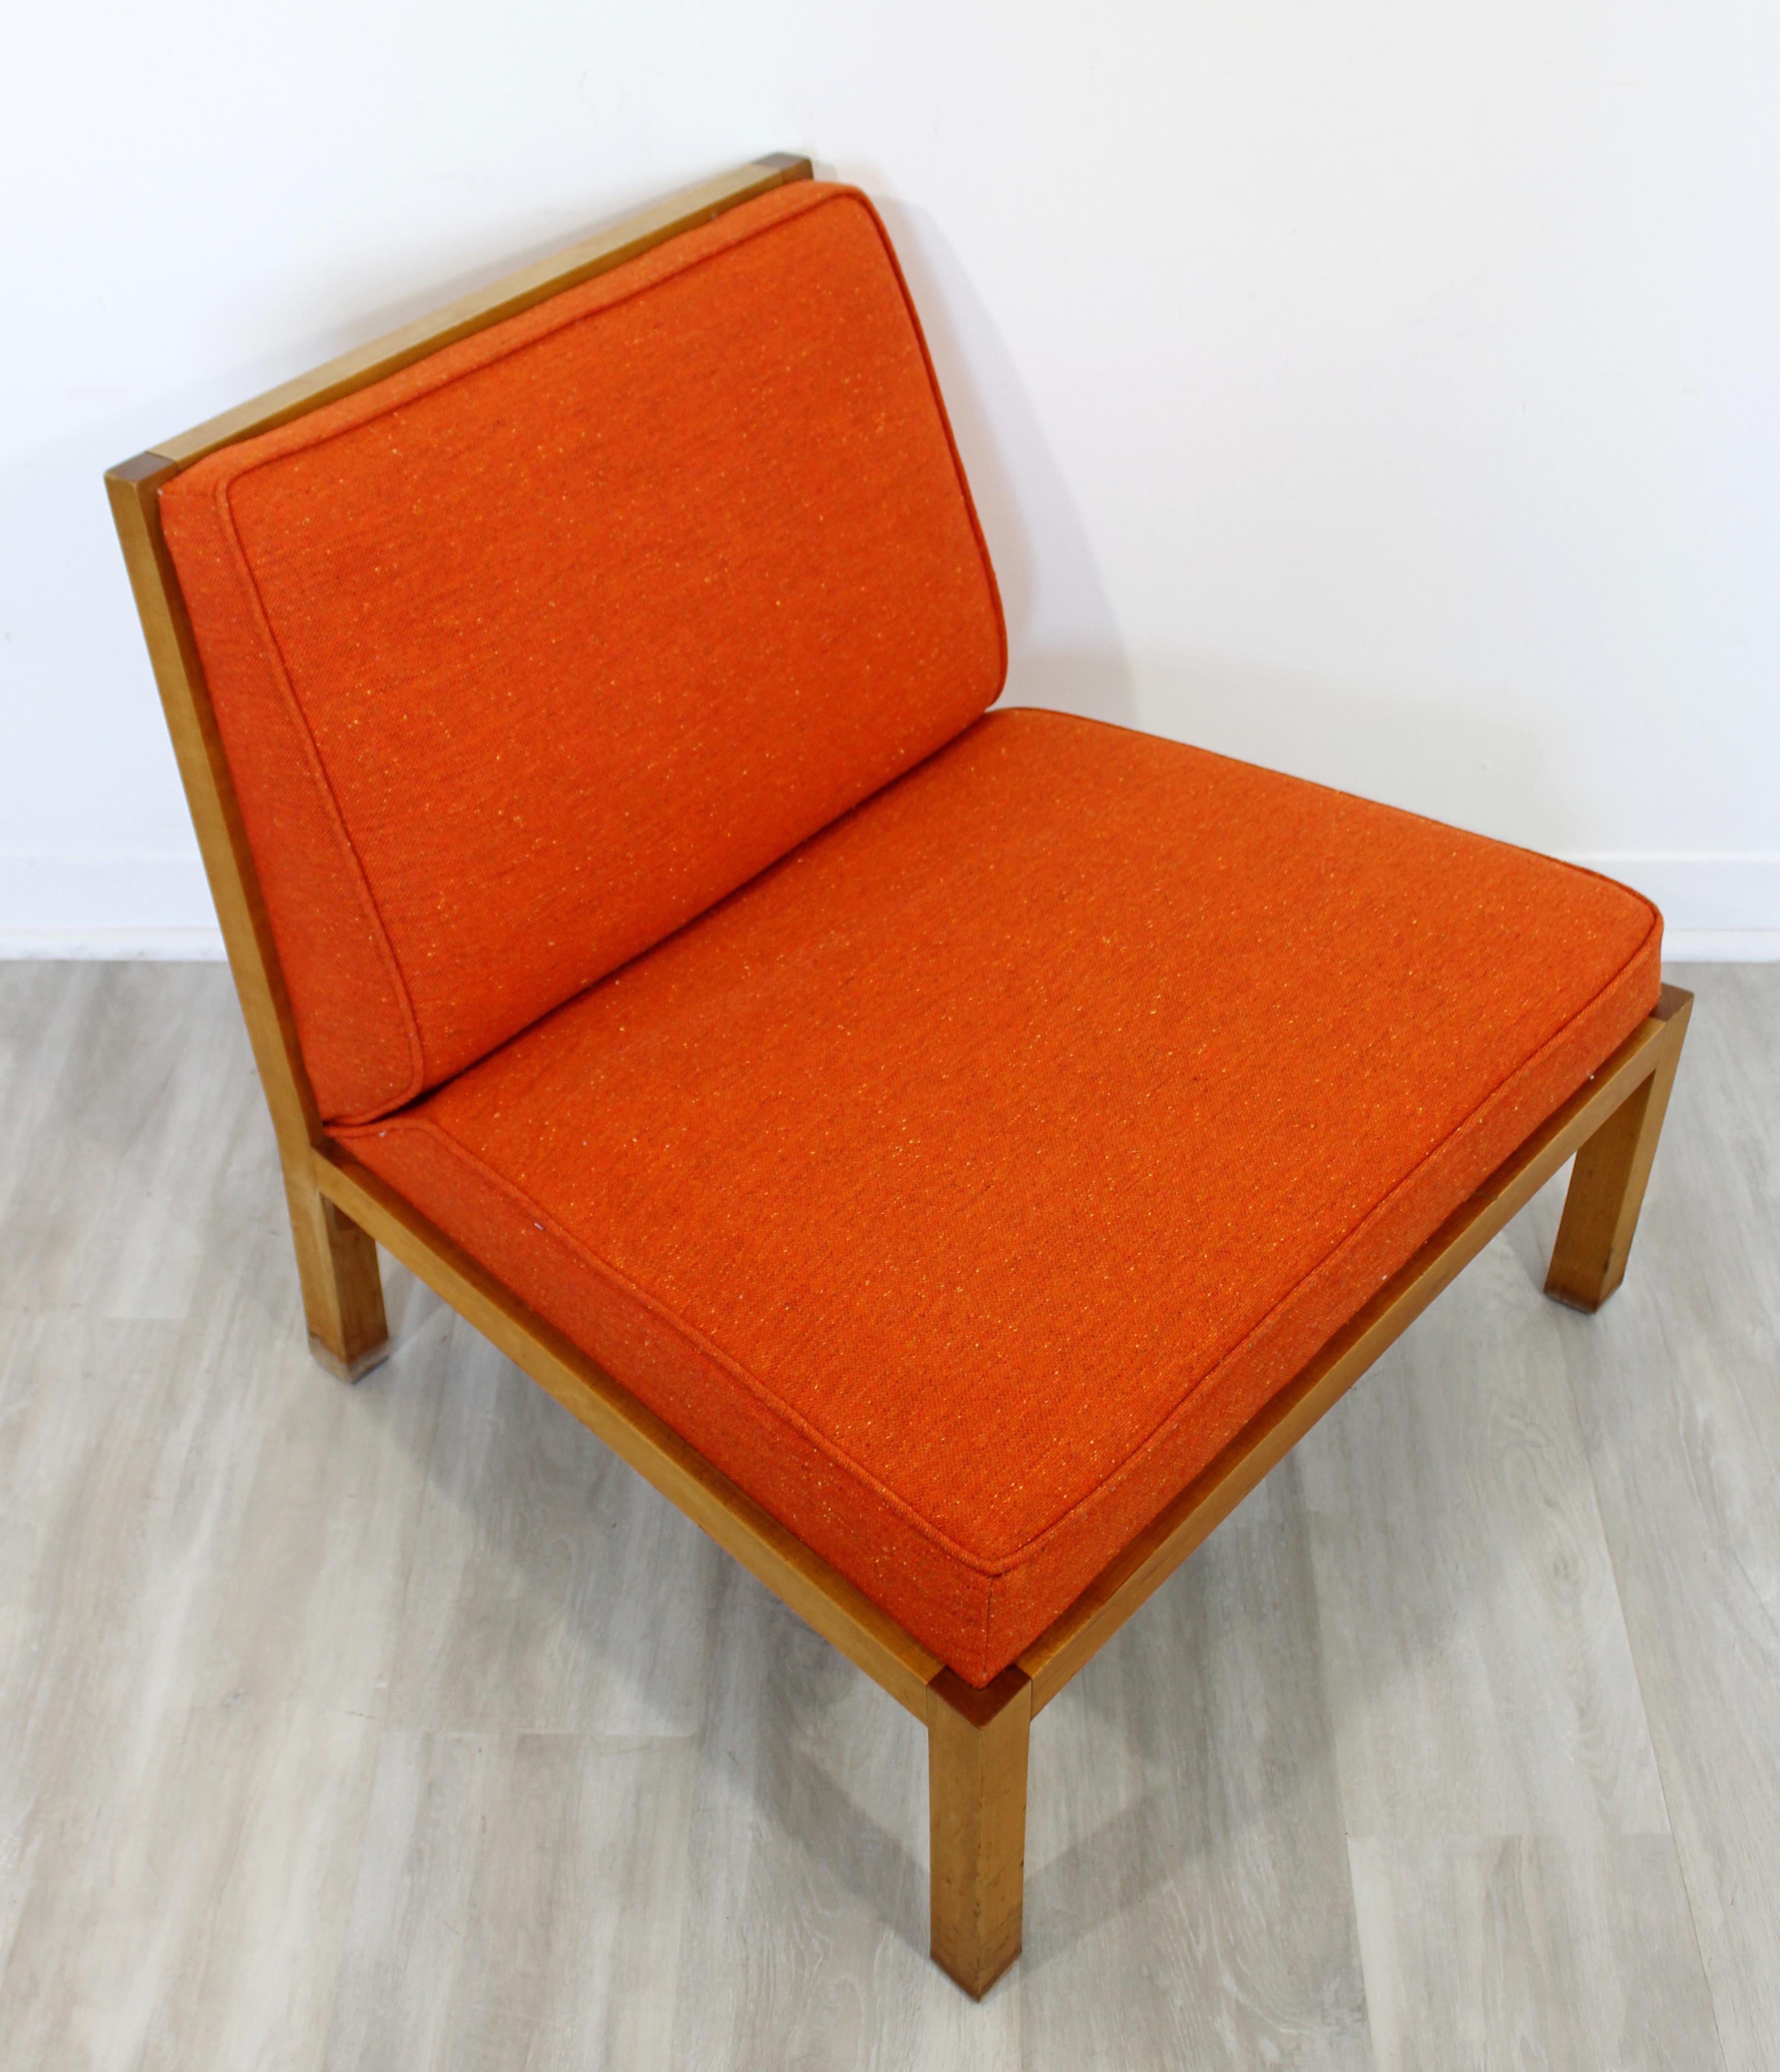 Mid-20th Century Mid-Century Modern Baker Wood Slat Back Side Lounge Accent Chair 1960s Orange